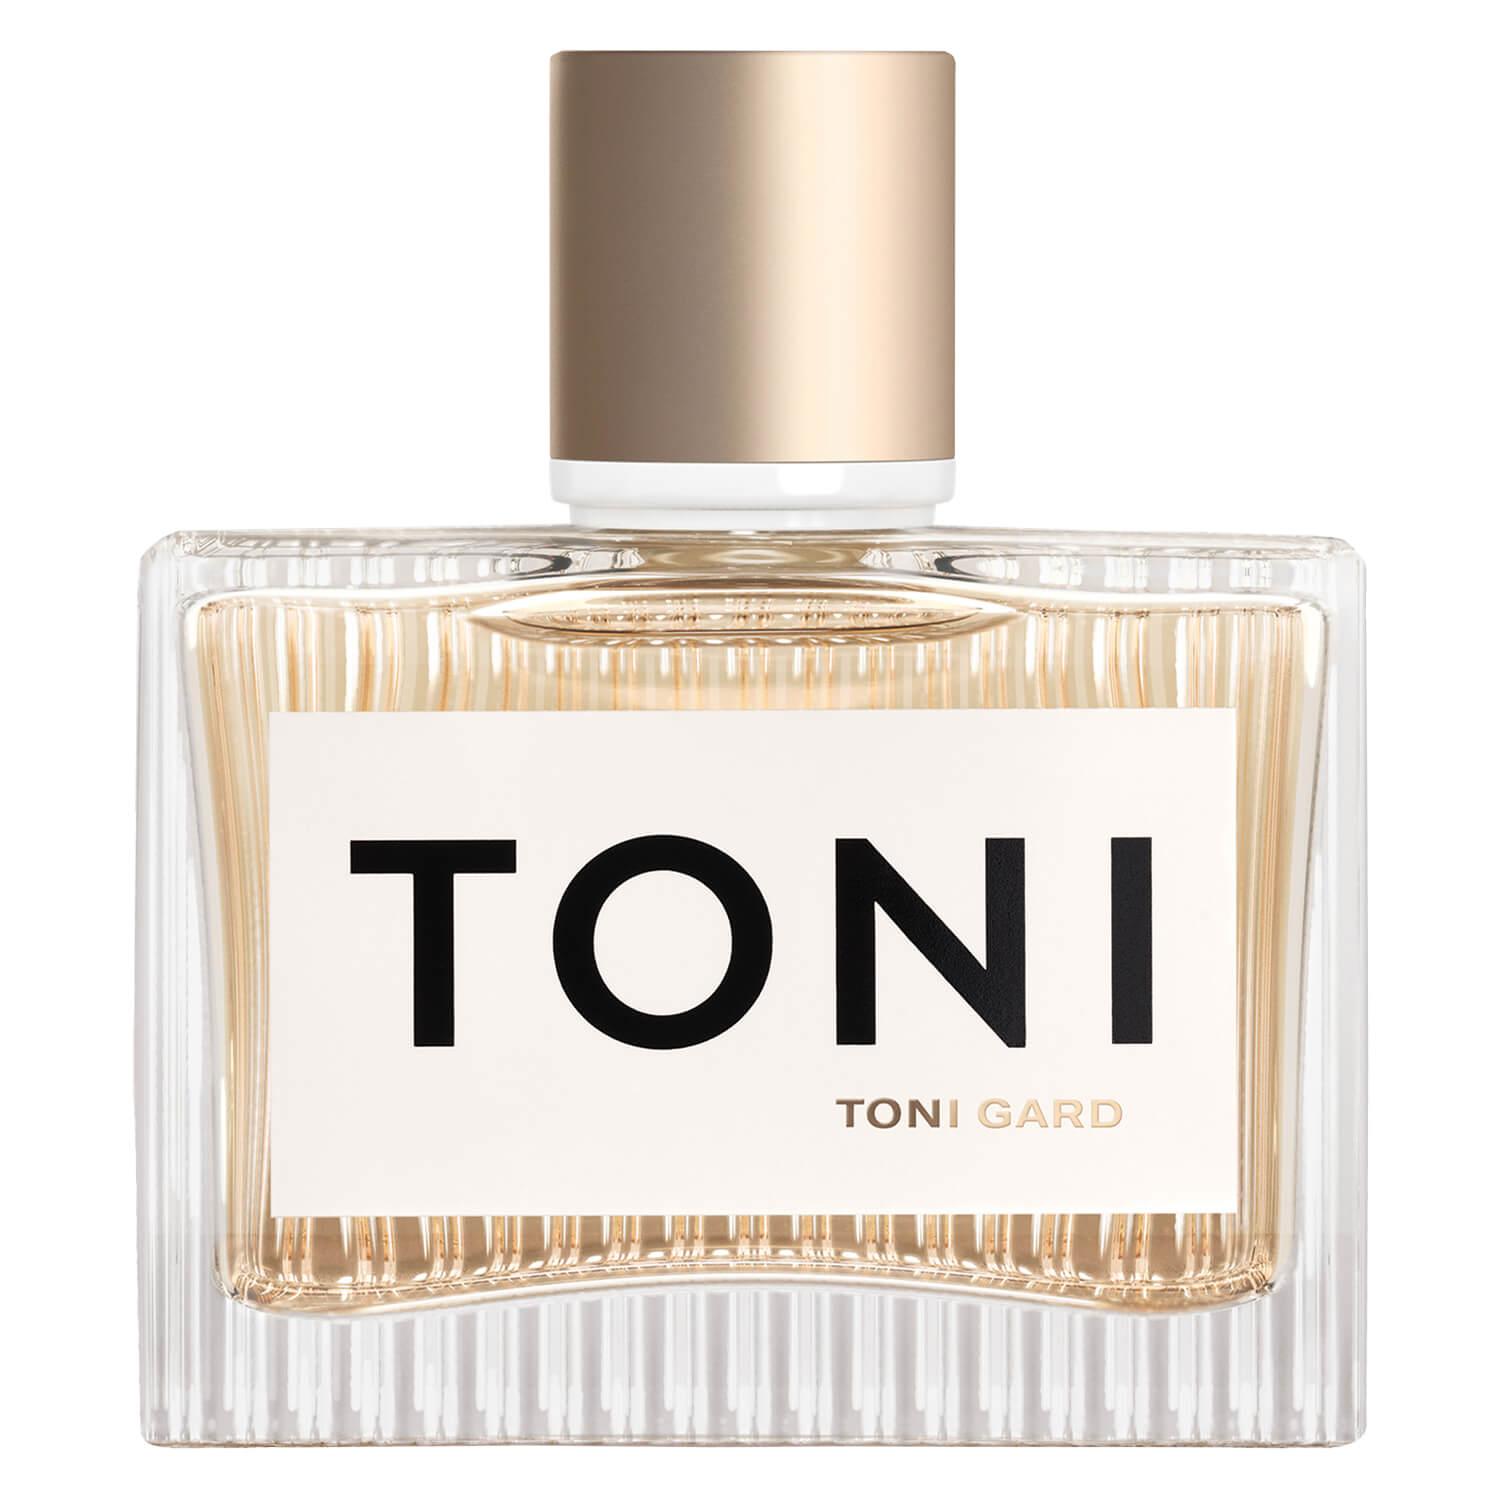 TONI GARD - Toni Woman Eau de Parfum